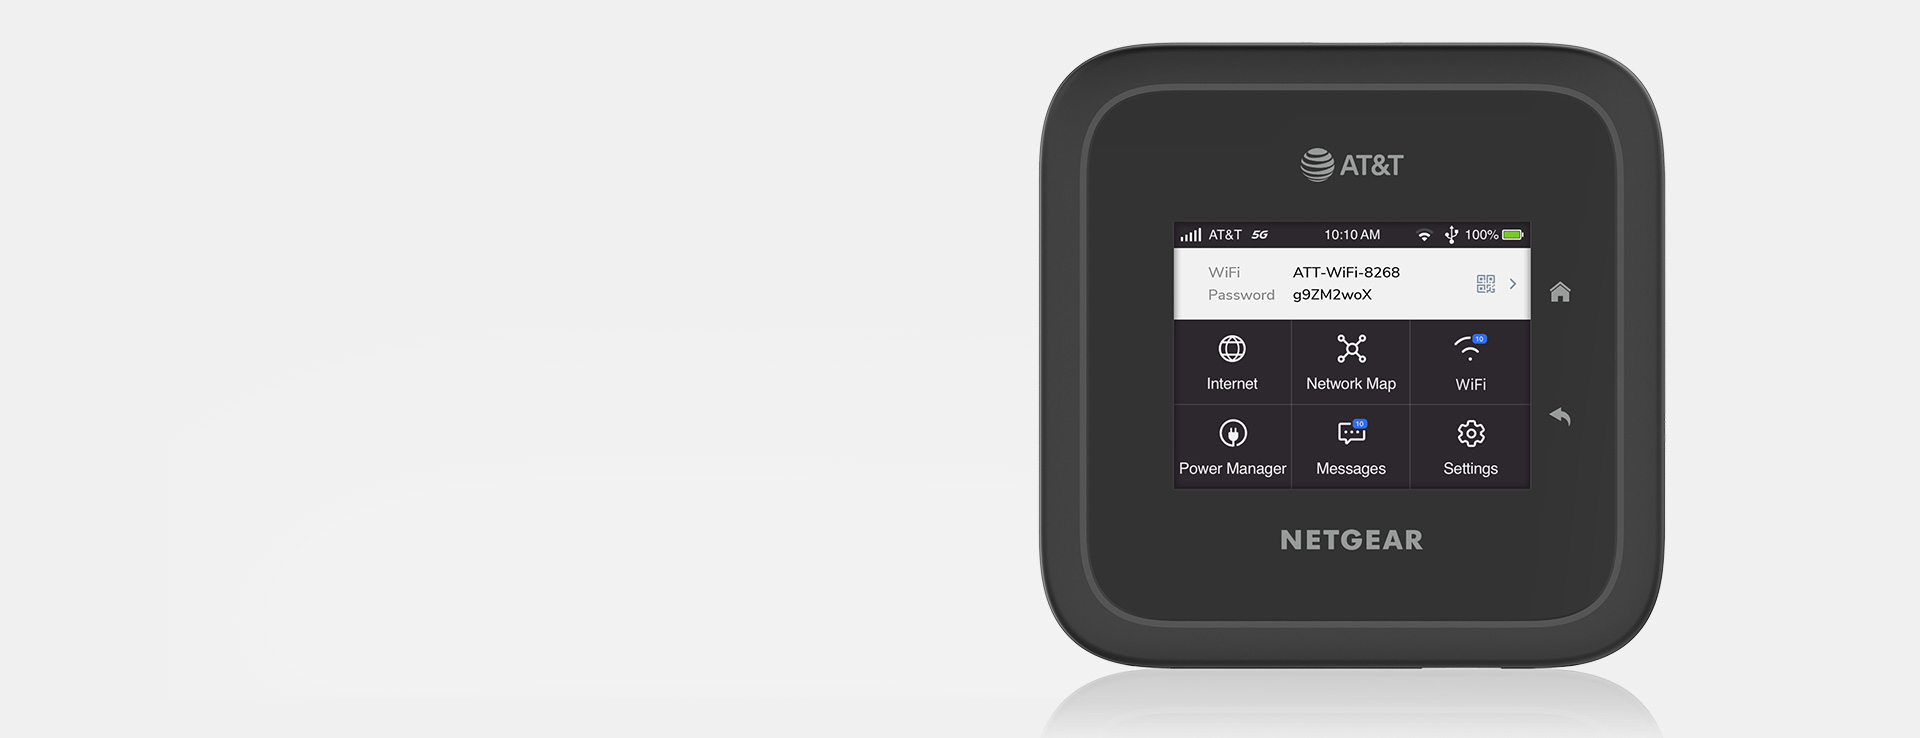 Netgear Nighthawk M6 Pro 5G mmWave Mobile Hotspot & AXE3600 Tri-Band Wi-Fi  Router (Unlocked)